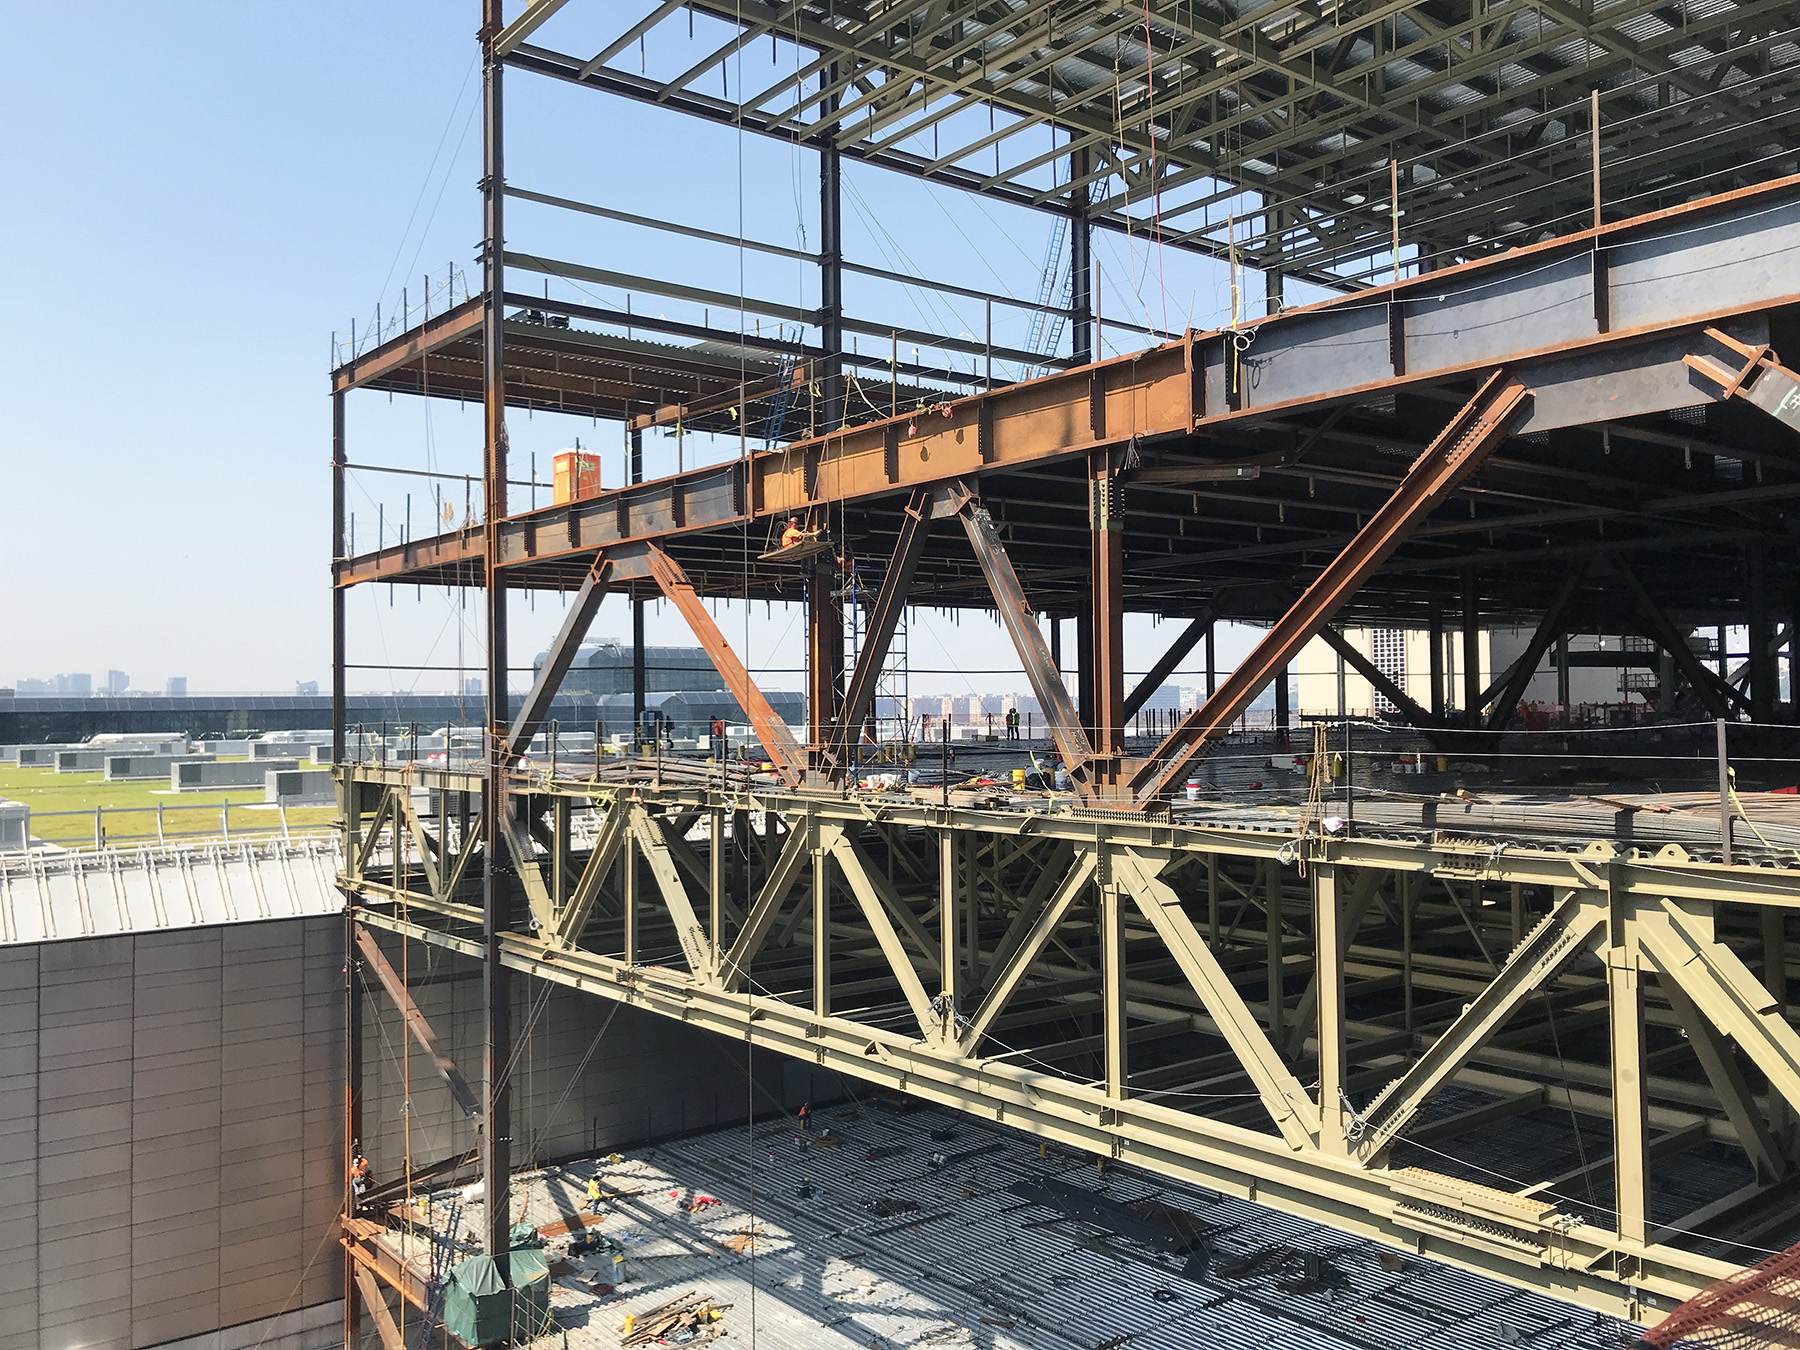 Construction photo of a building’s girders, beams, floor slabs